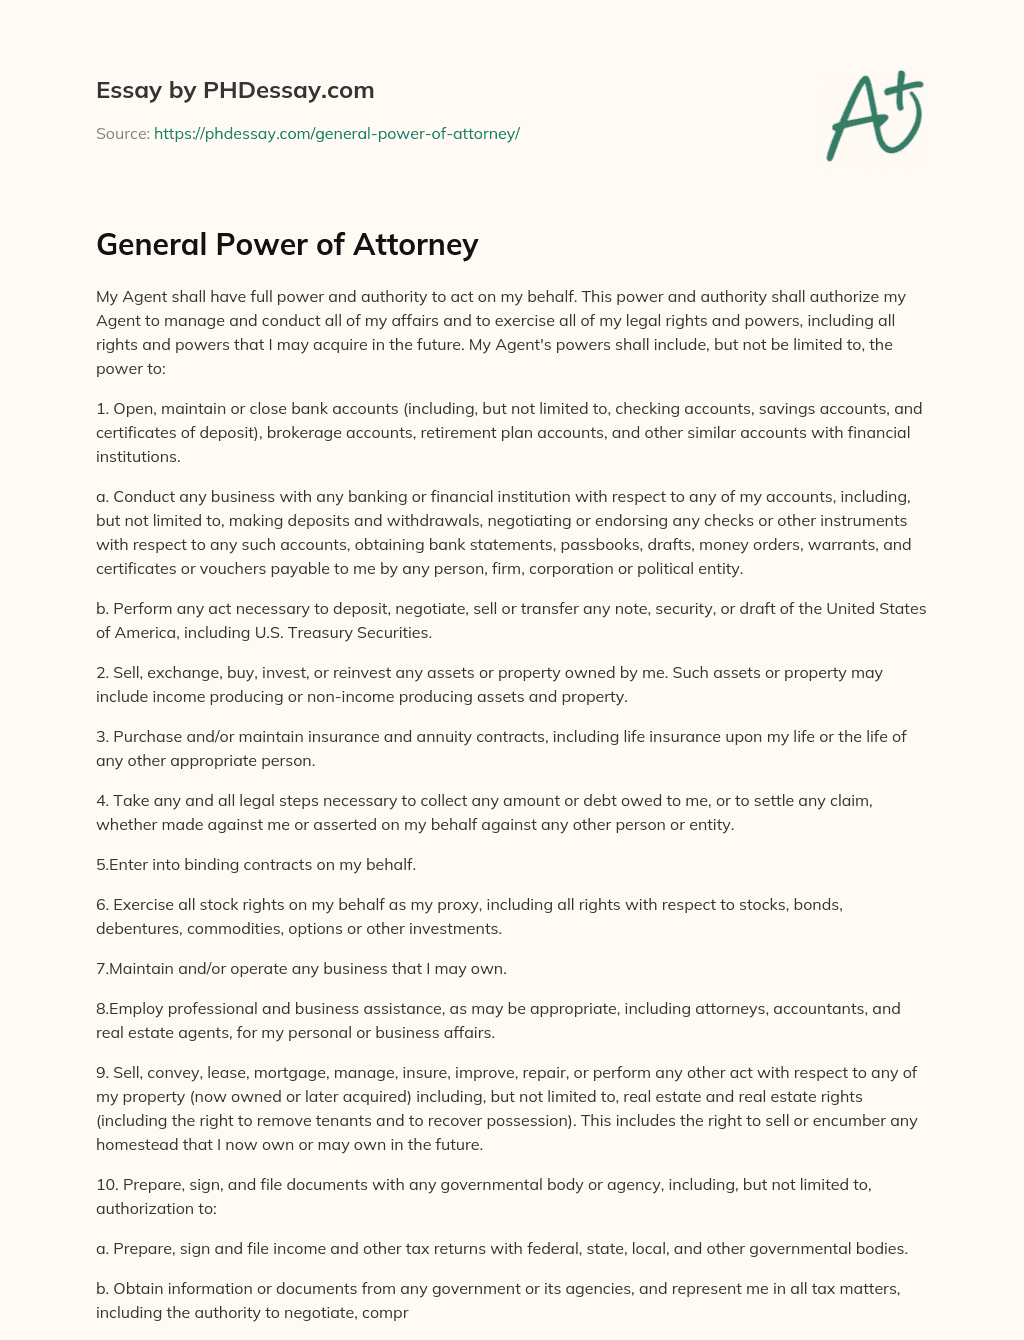 General Power of Attorney essay